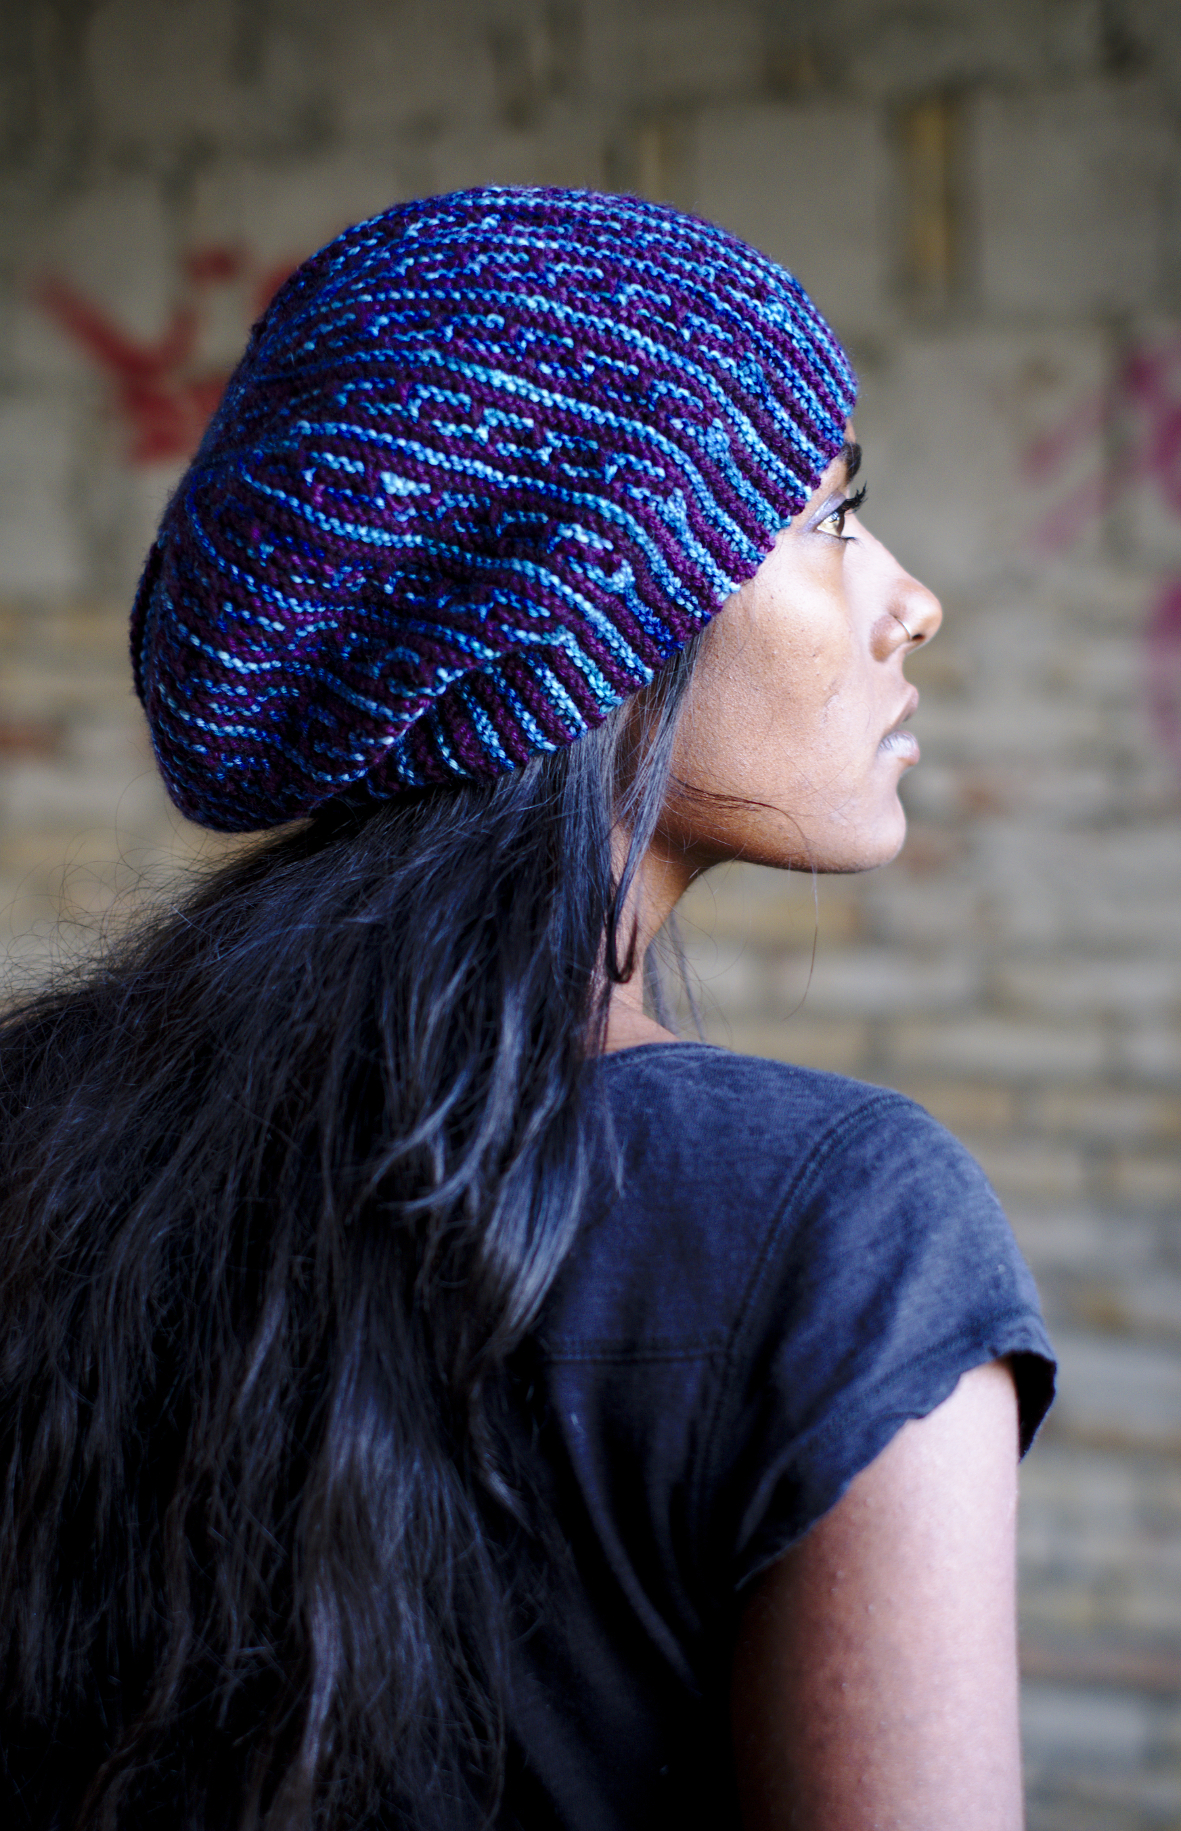 High Rise sideways knit mosaic slipped stitch colourwork Hat hand knitting pattern for DK yarn